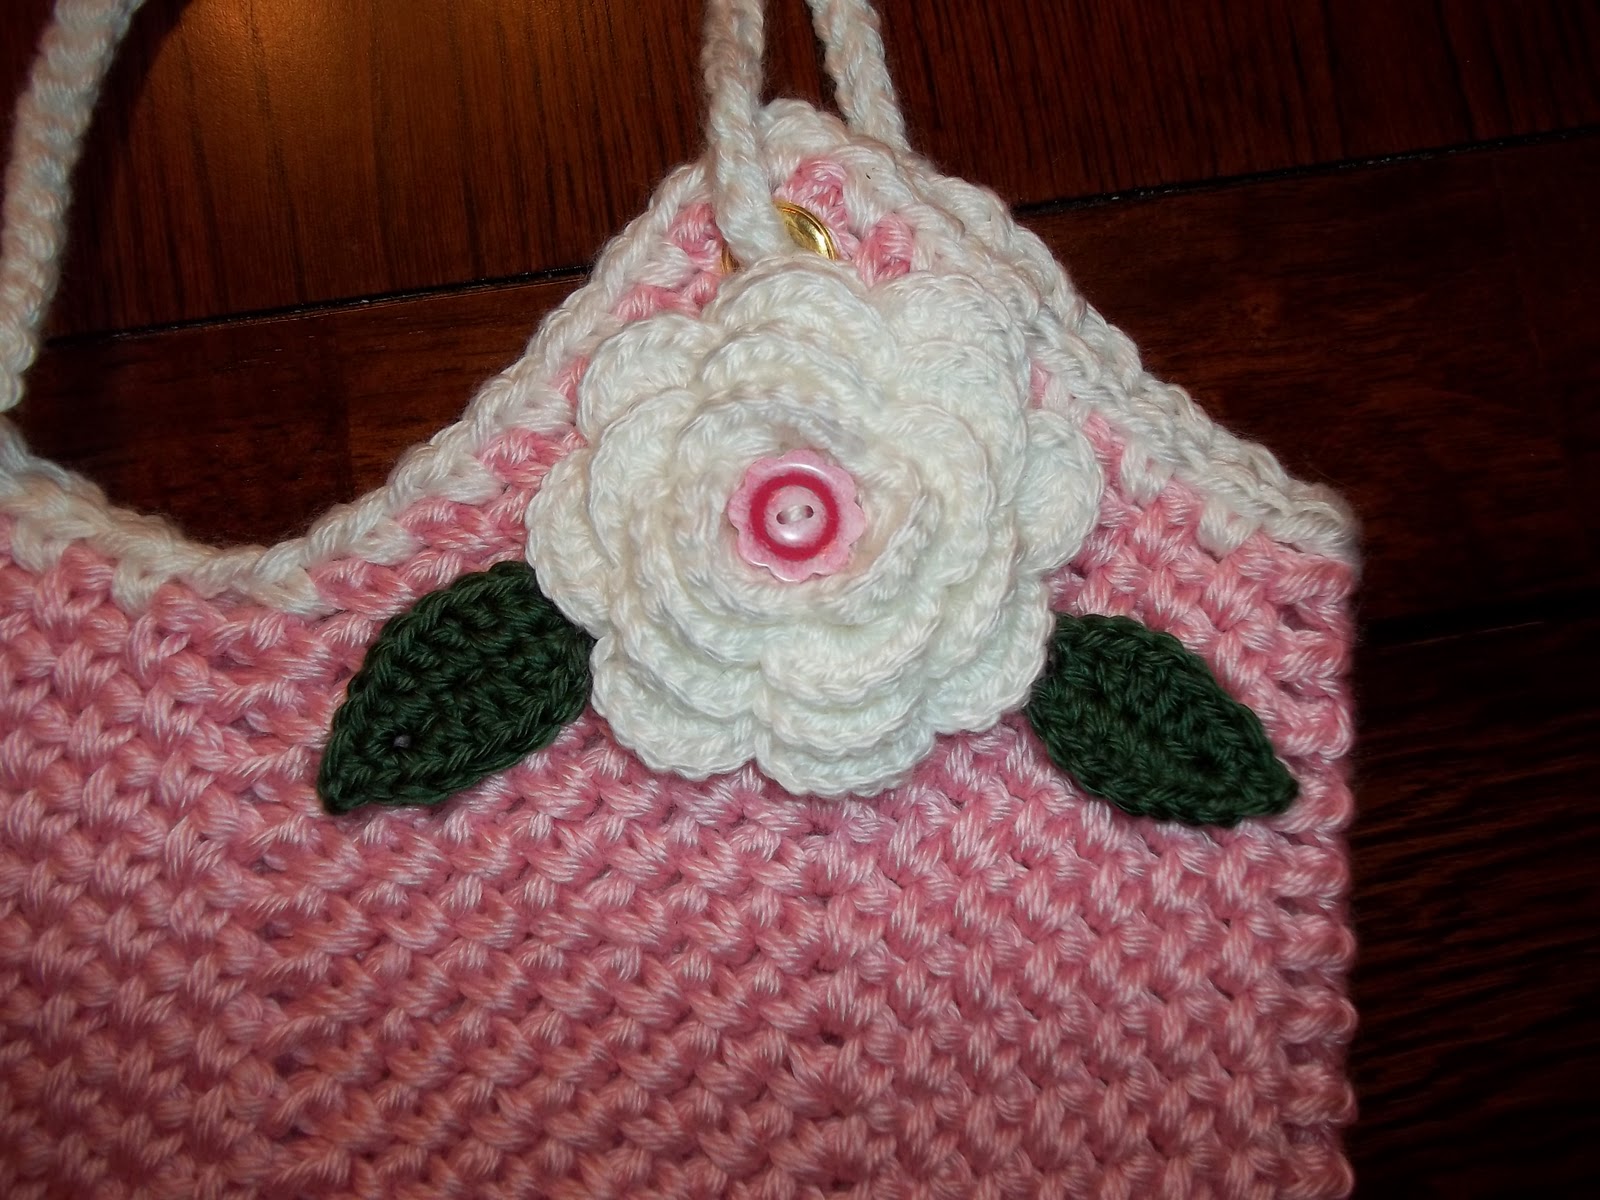 Crochet | Pattern | Tutorial | Paperweight G
ranny African Flower